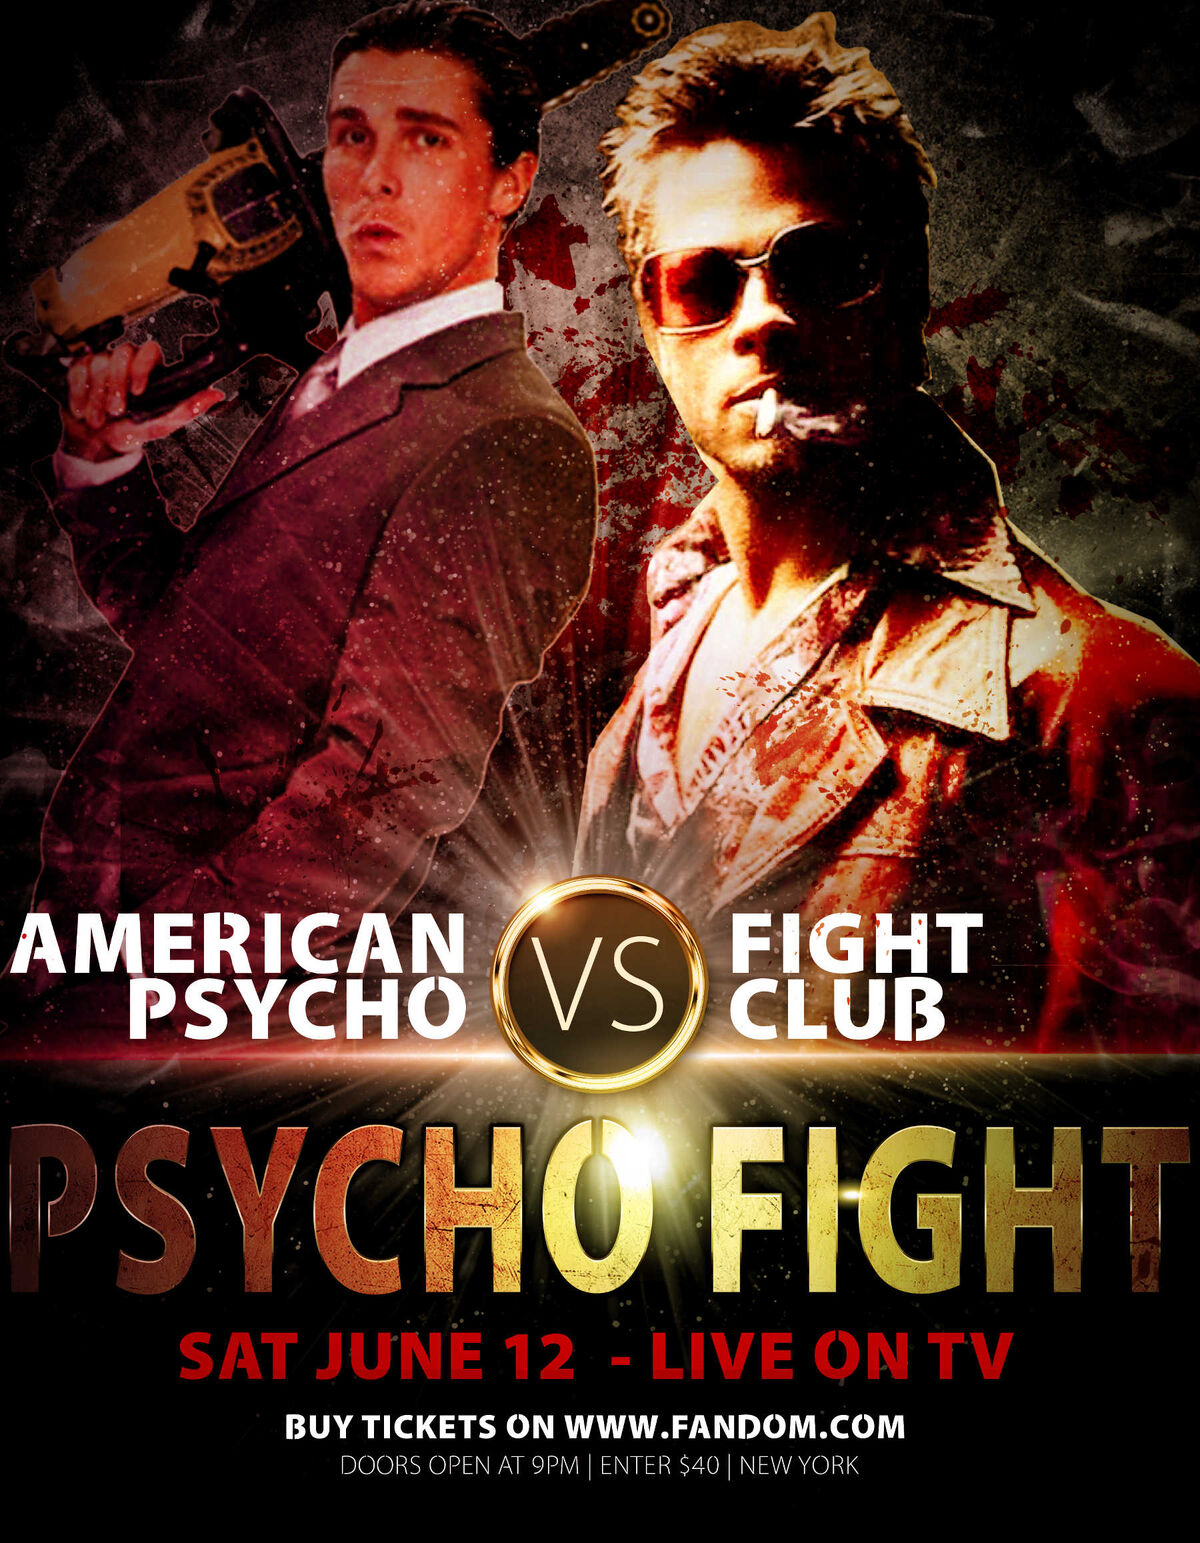 versus-american-psycho-fight-club